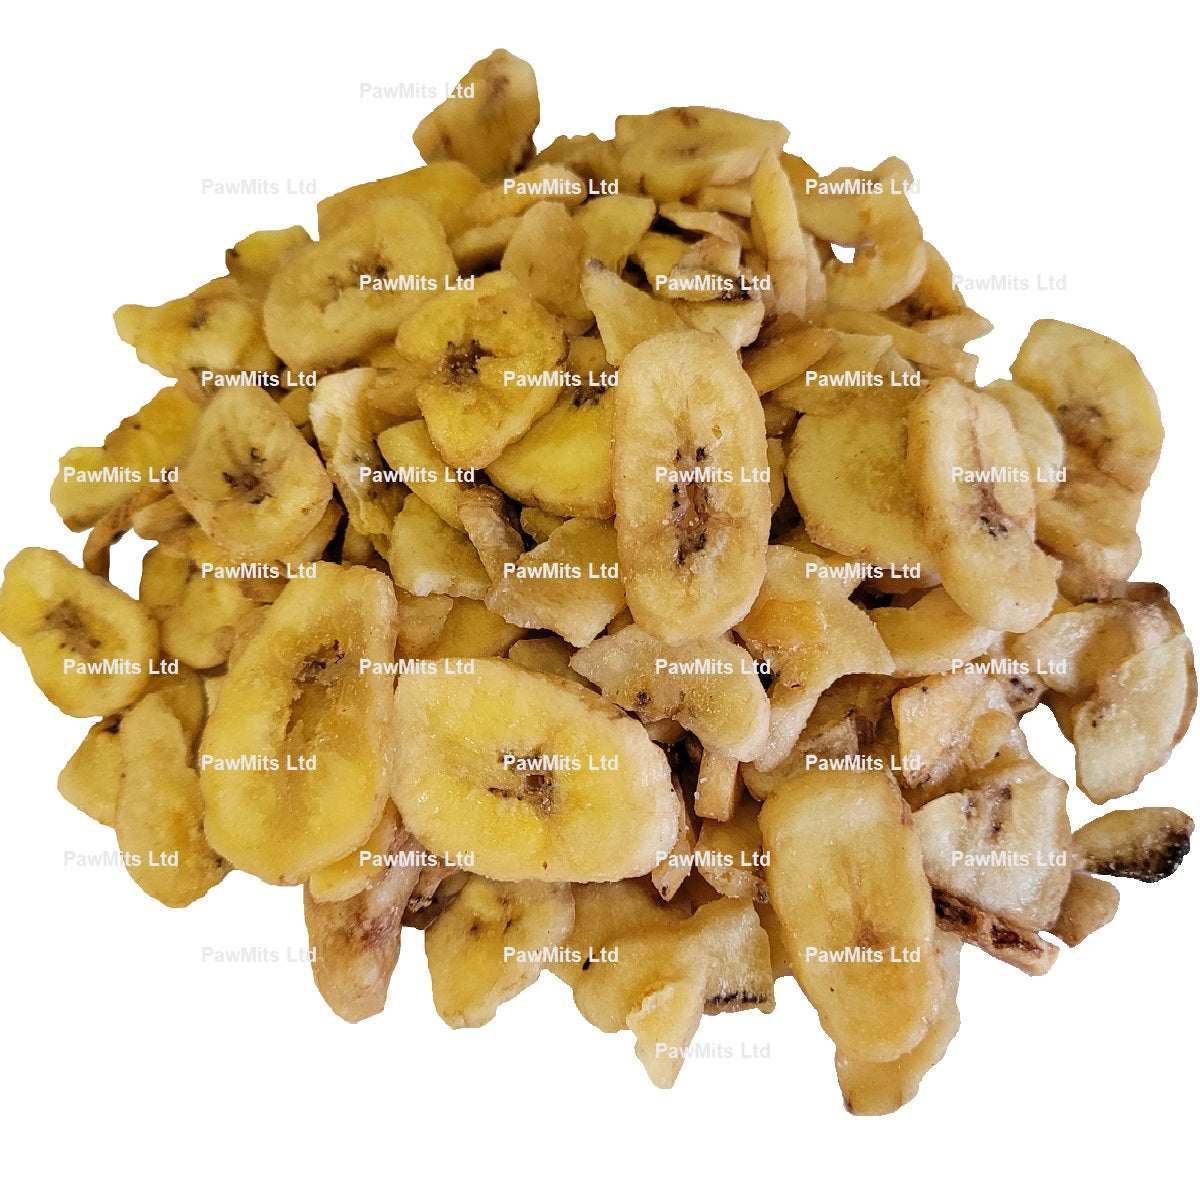 Bucktons - Banana Chips